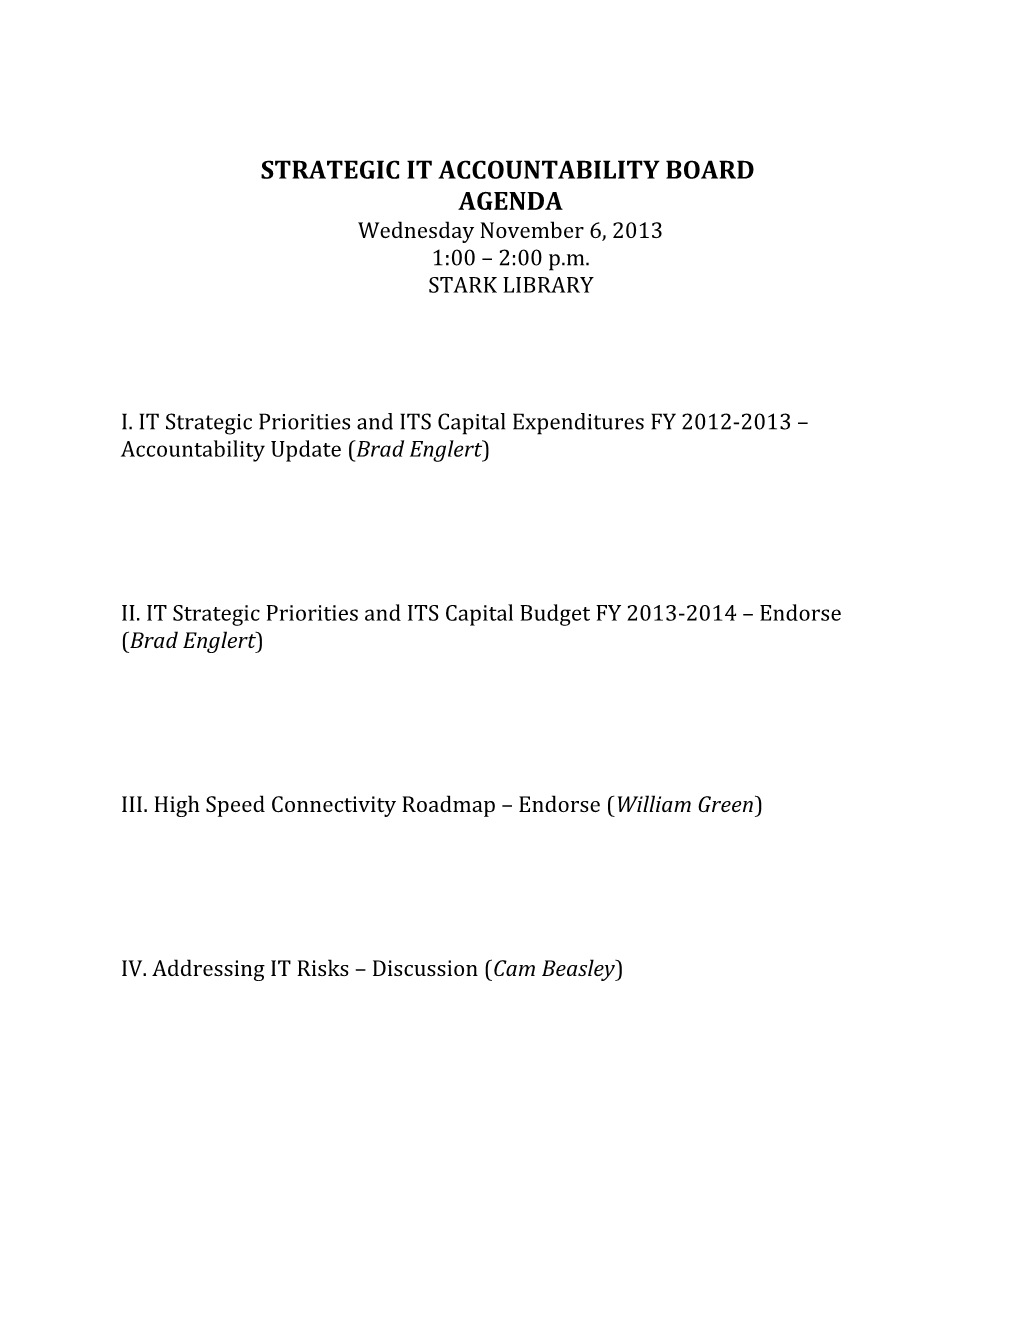 Strategic It Accountability Board